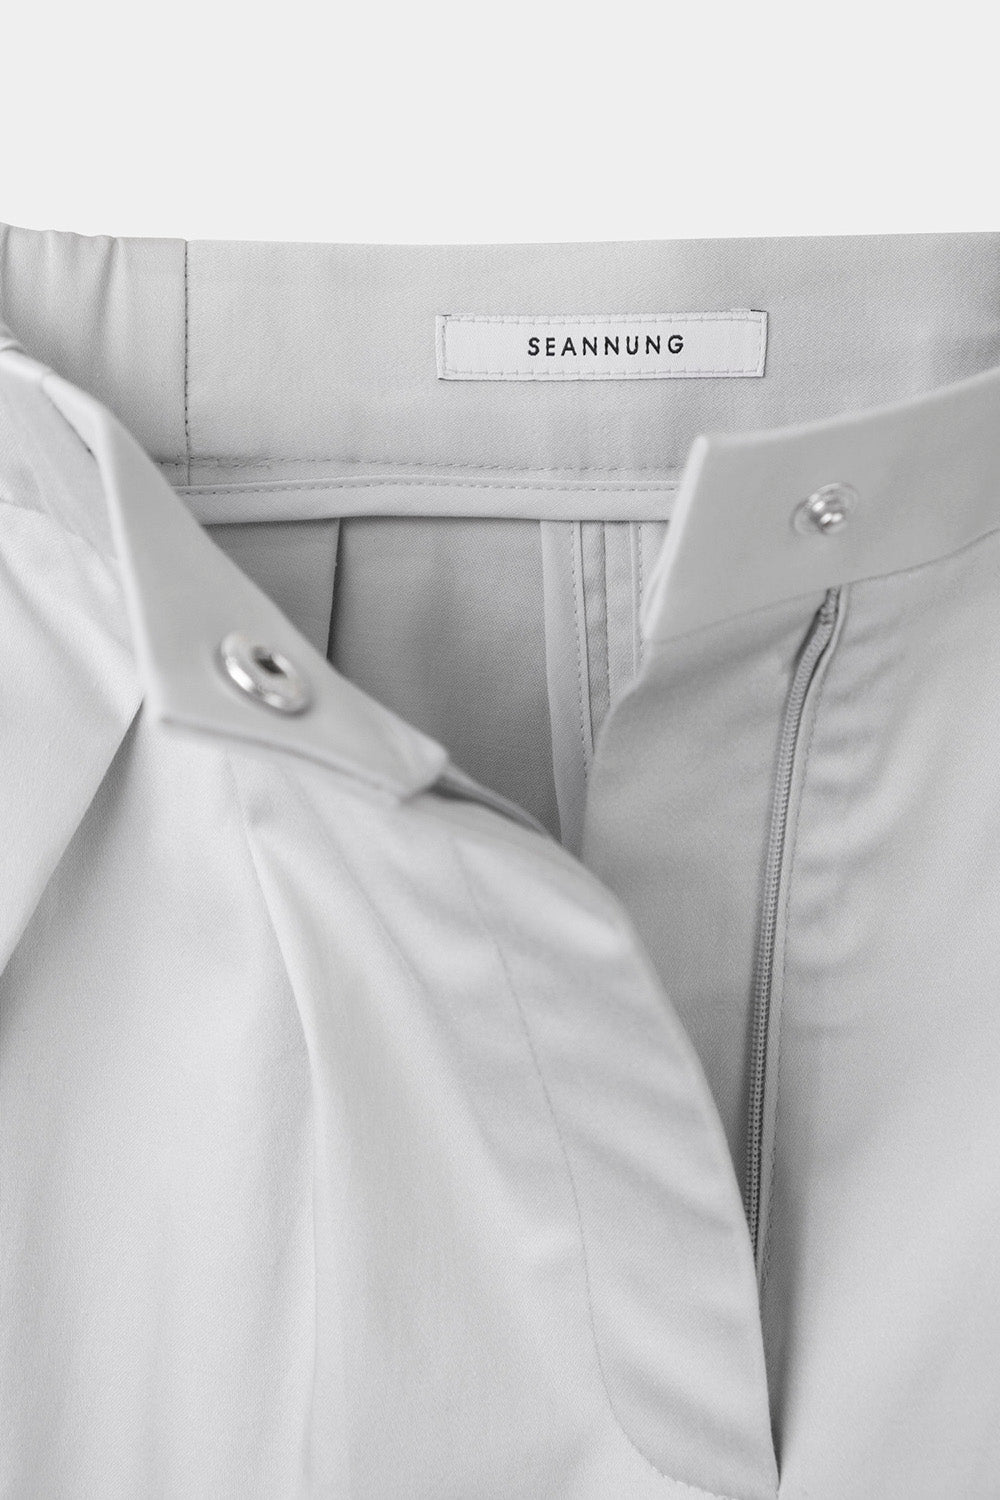 SEANNUNG - WOMEN -  Layered Skort 雙摺層次褲裙